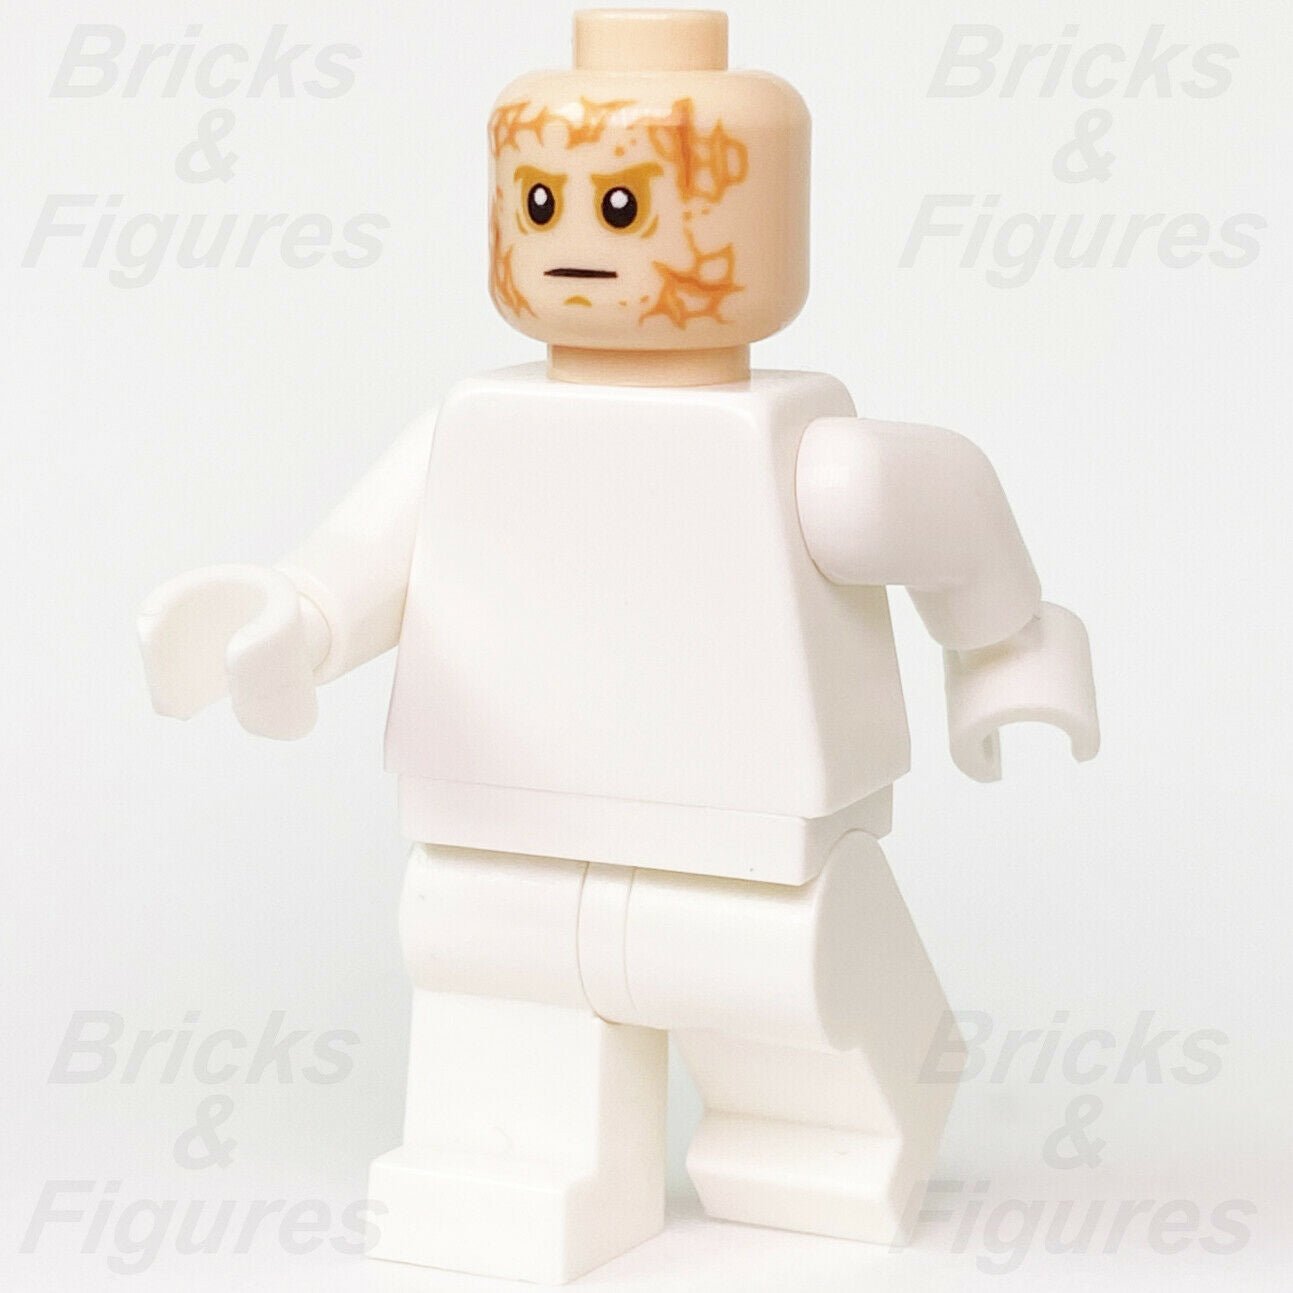 Star Wars LEGO Darth Vader Head / Face with Burn Scars Minifigure Part 75183 - Bricks & Figures